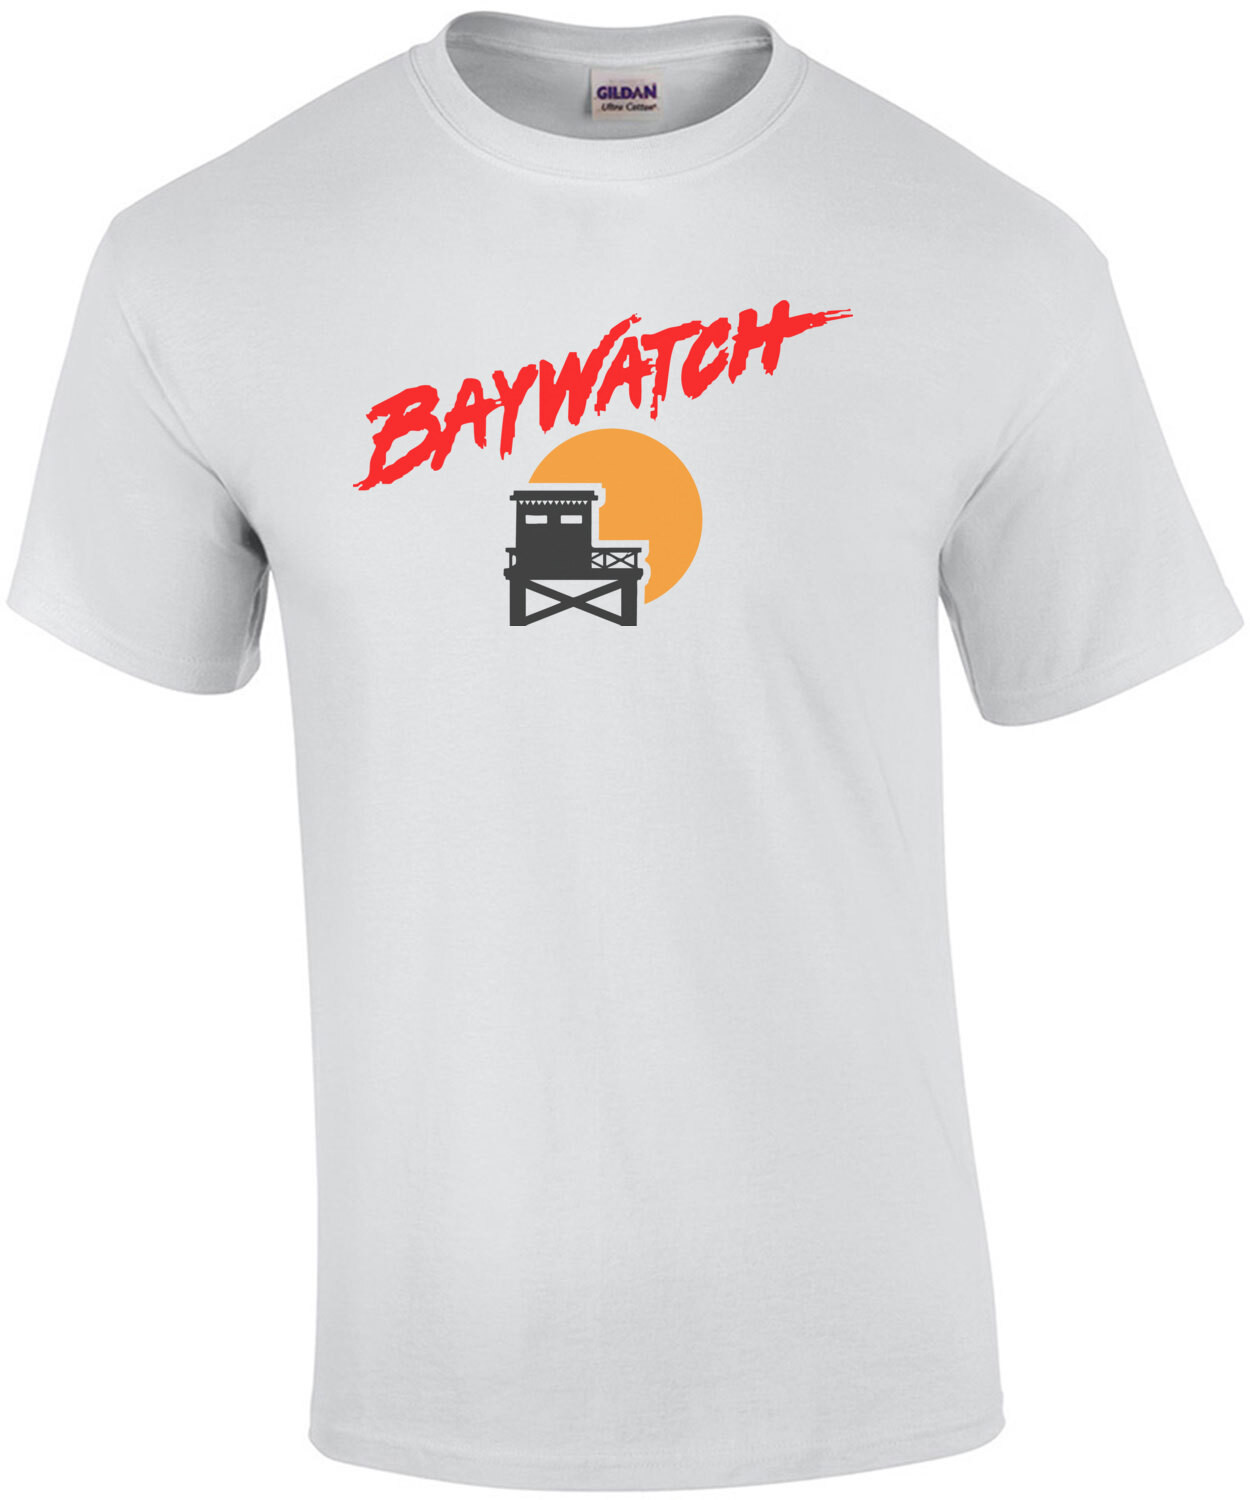 Baywatch - 80's T-Shirt